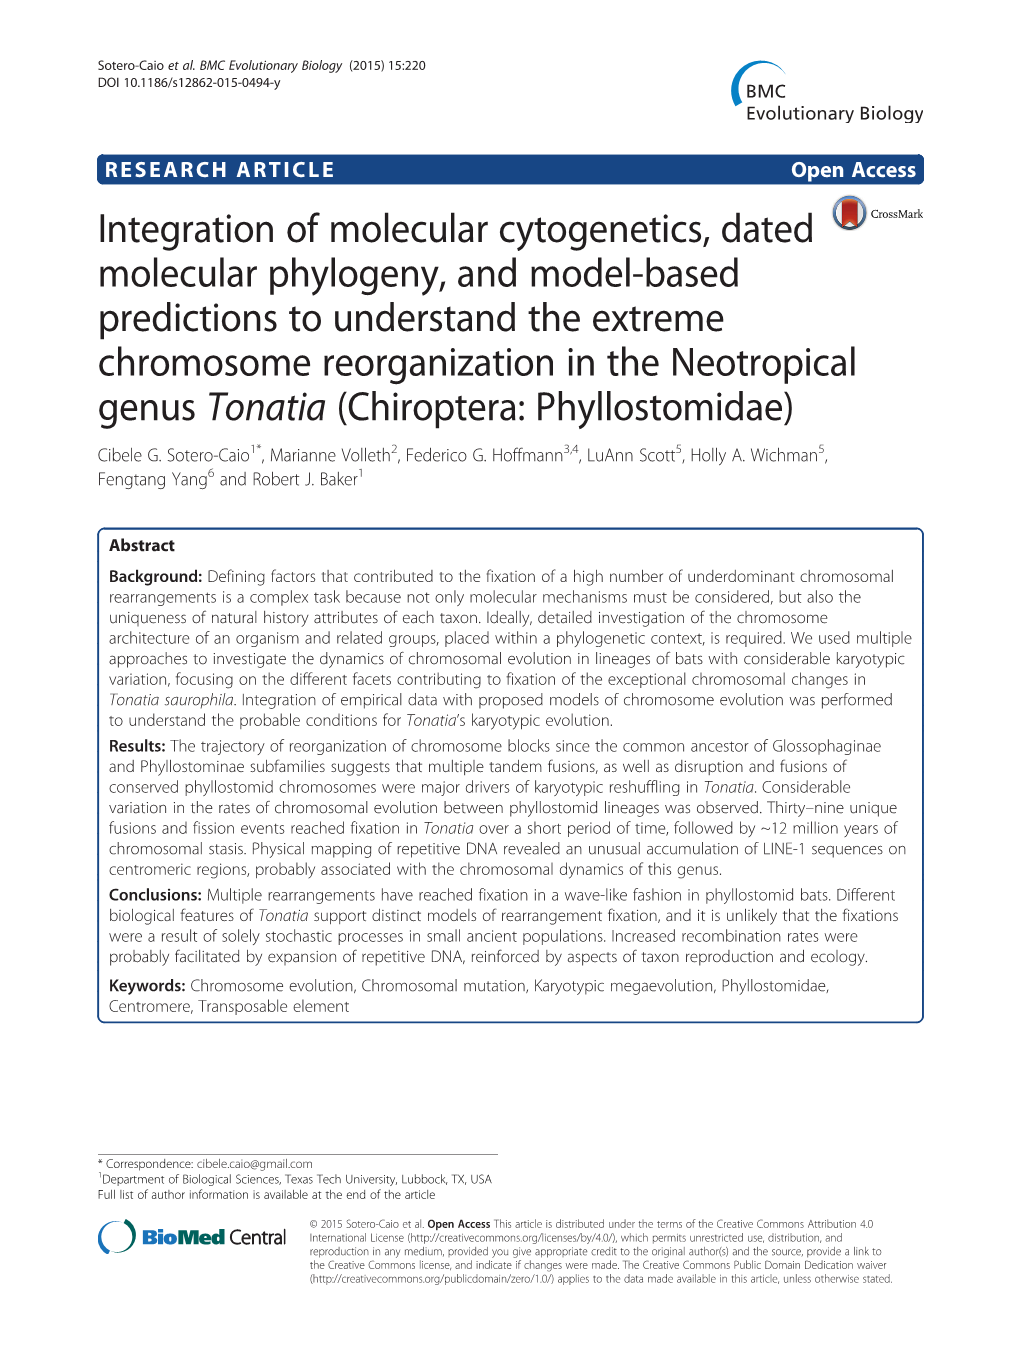 Integration of Molecular Cytogenetics, Dated Molecular Phylogeny, And